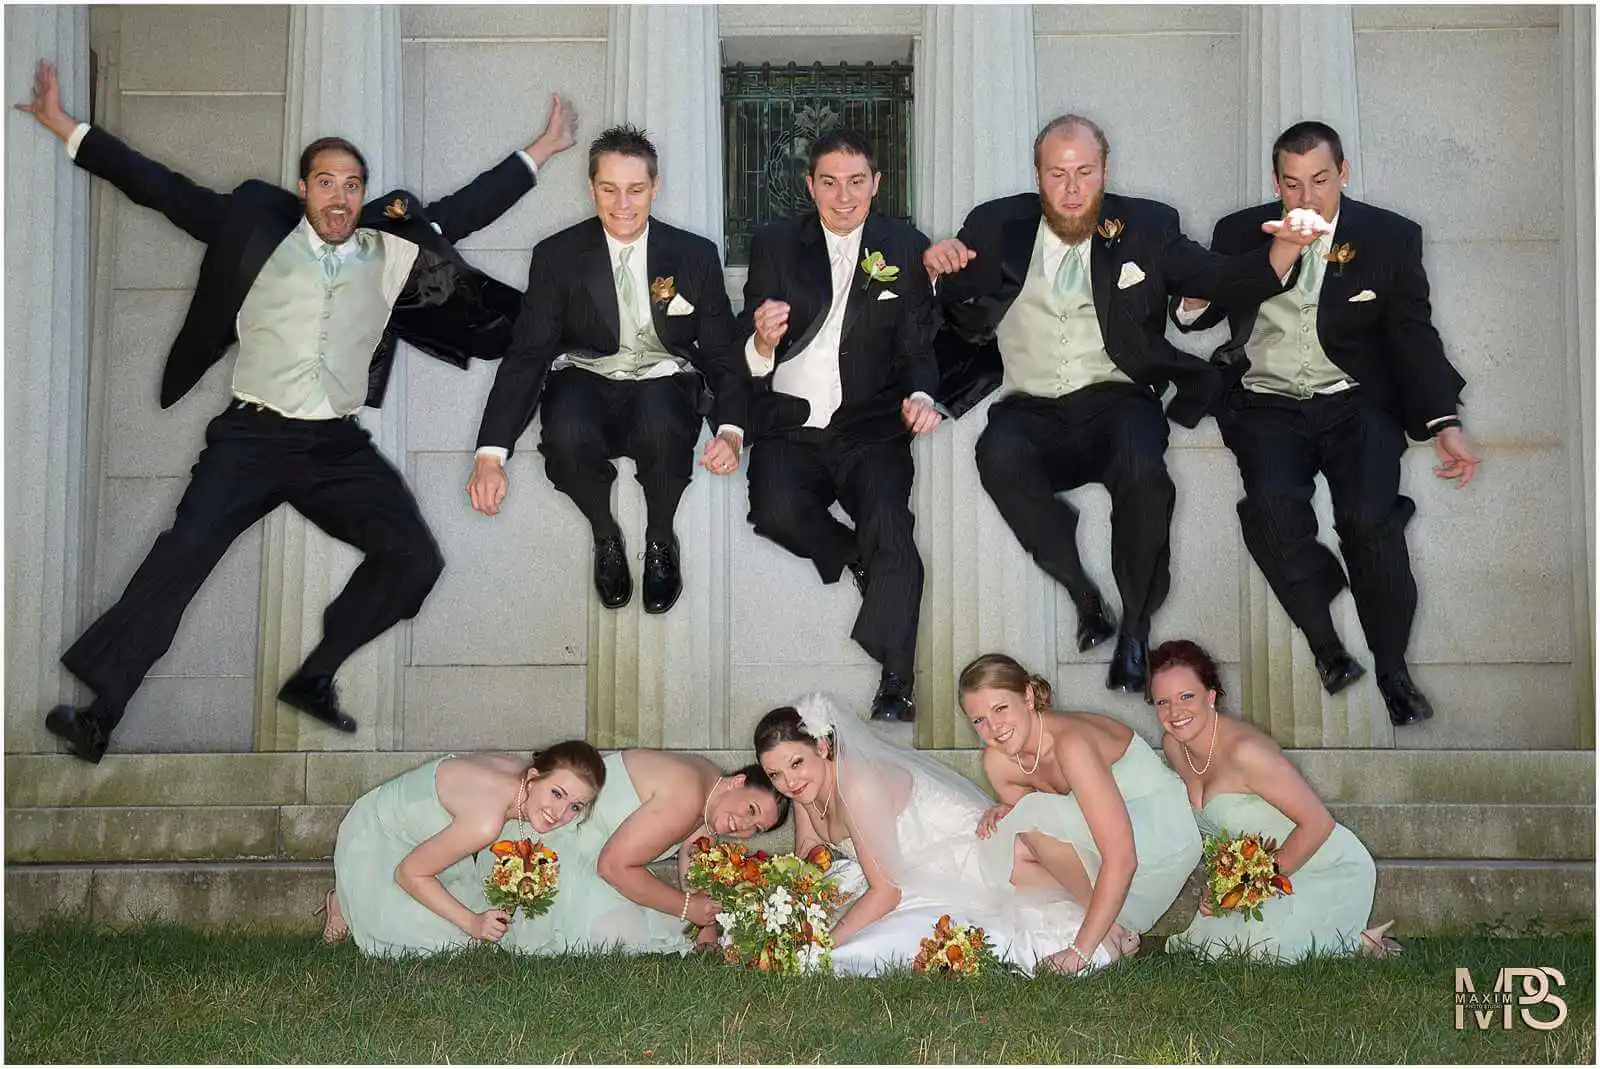 Joyful bridal party posing for creative wedding photo.